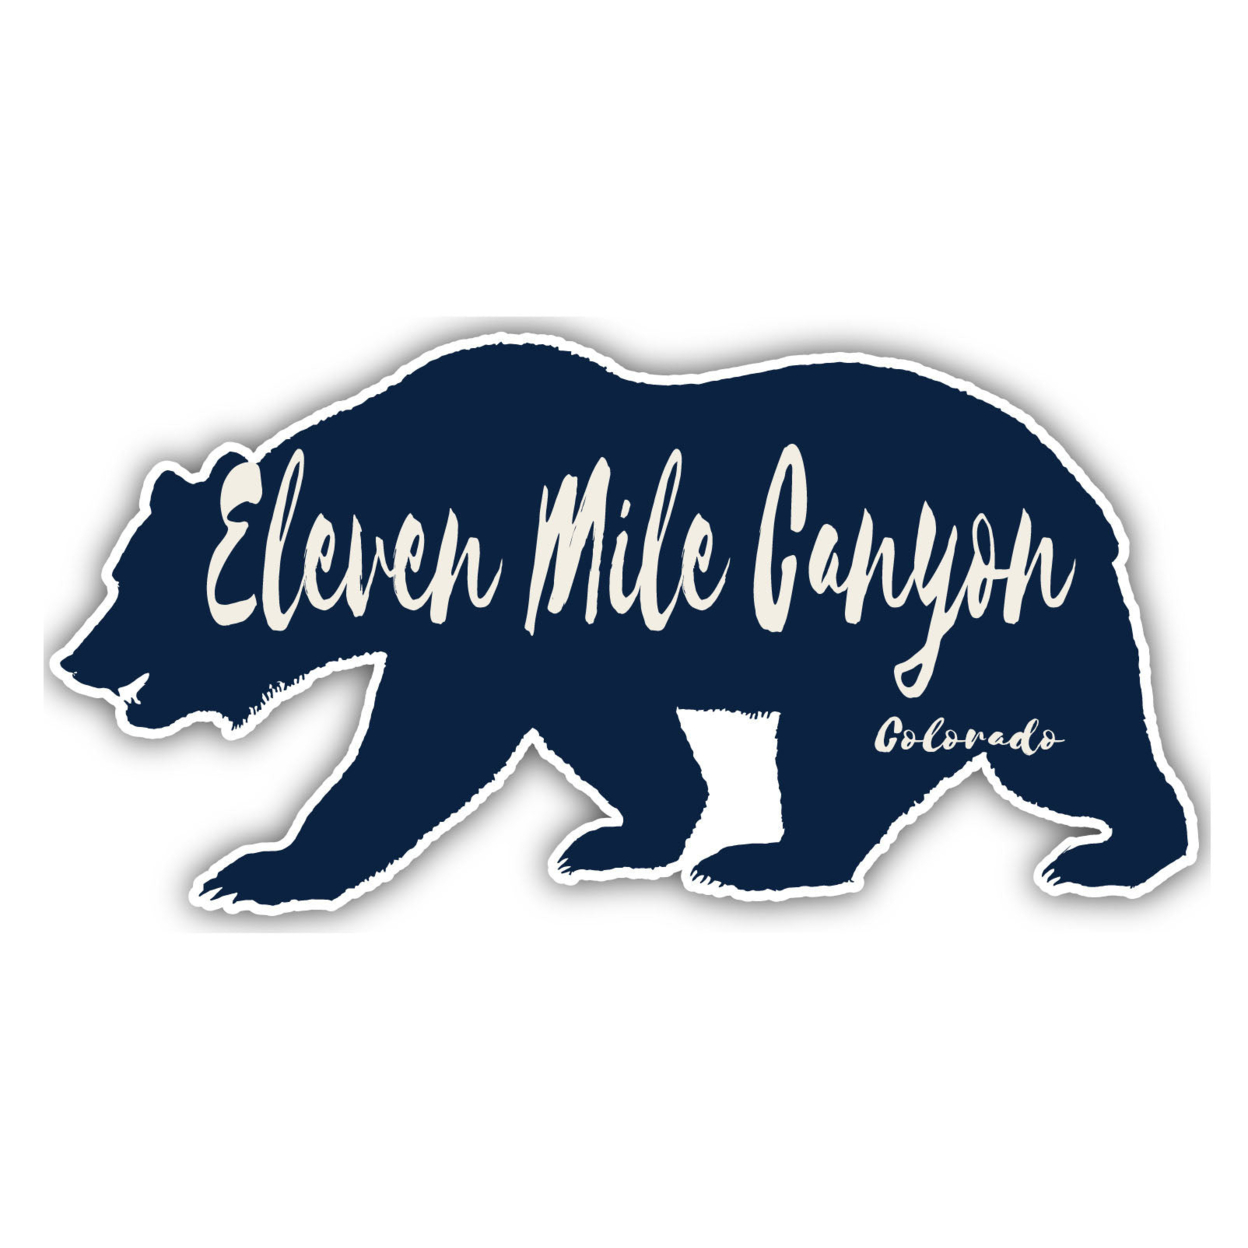 Eleven Mile Canyon Colorado Souvenir Decorative Stickers (Choose Theme And Size) - Single Unit, 8-Inch, Tent